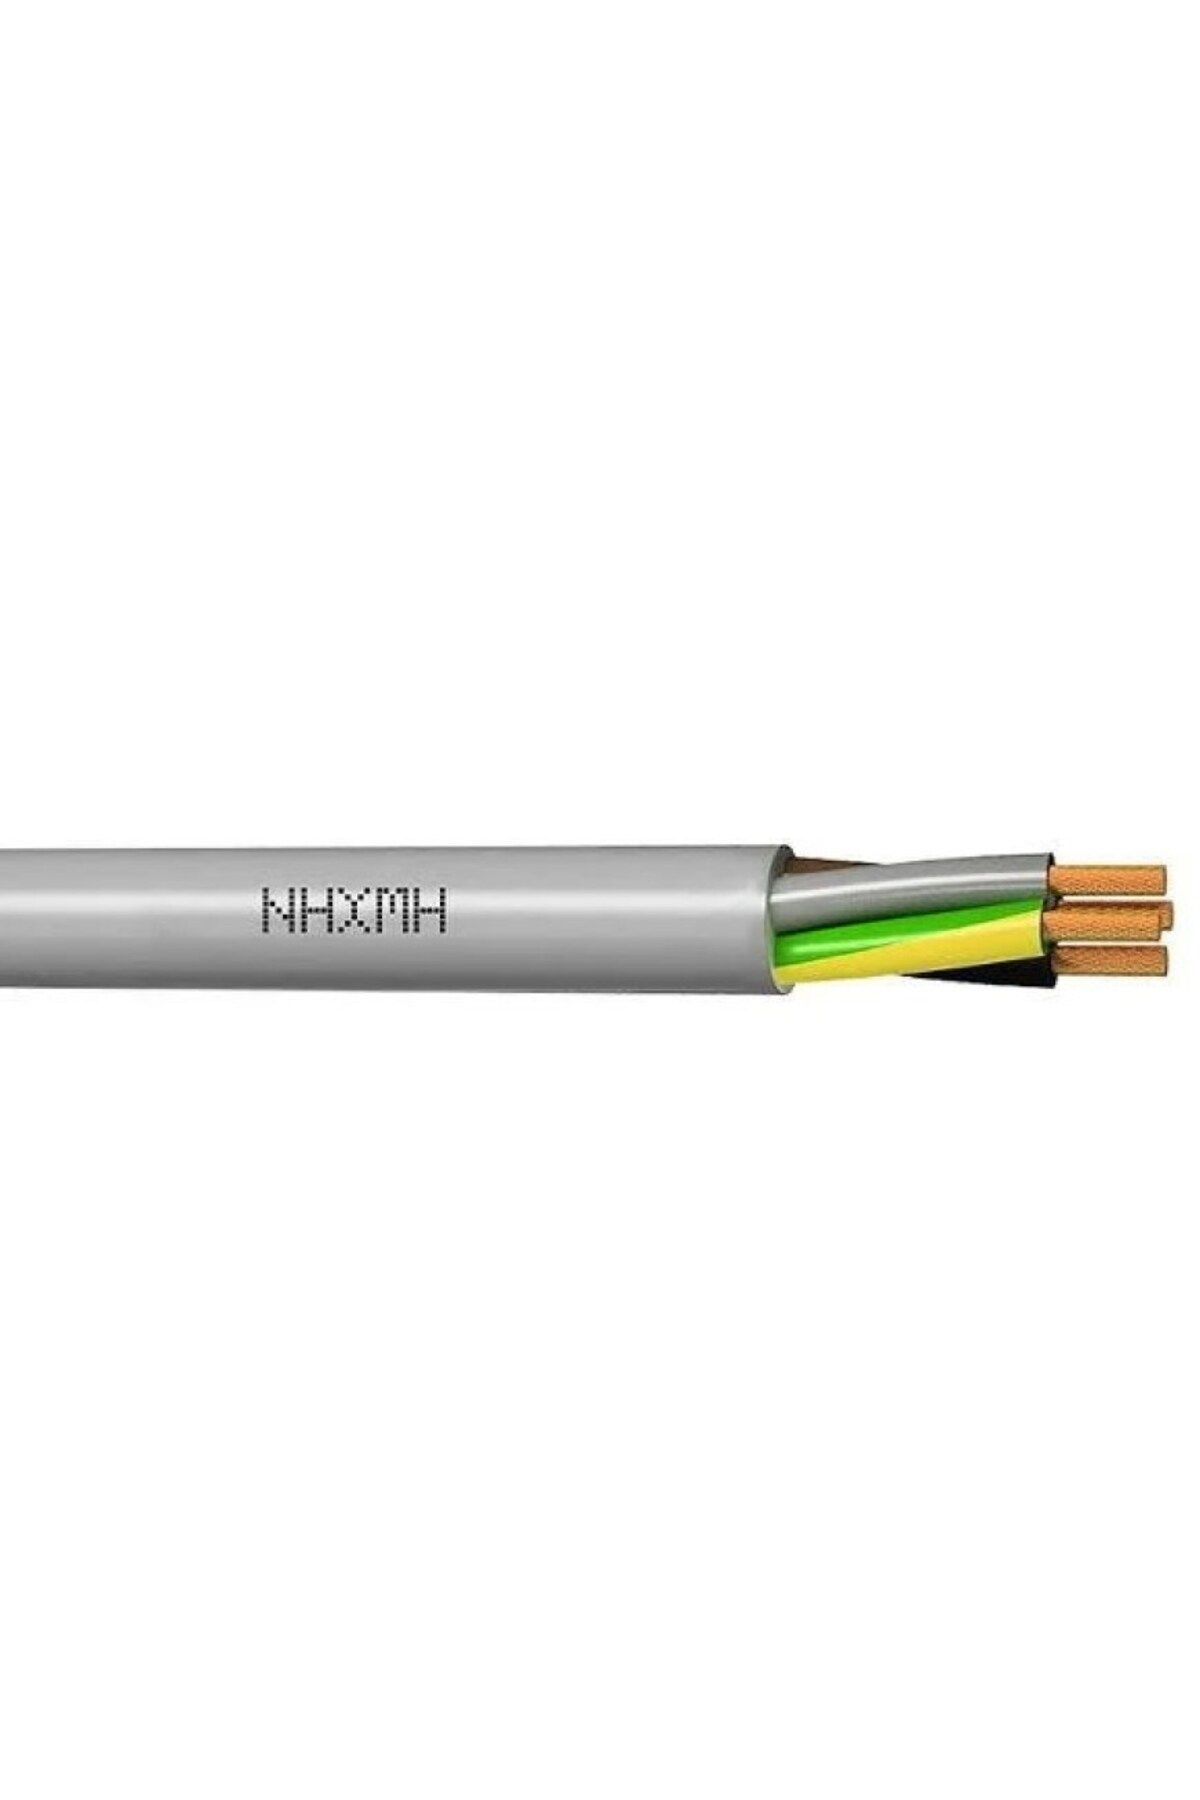 ÖZNUR 50 Metre 5x2.5 NHXMH Halogen Free Kablo Öznur Kablo